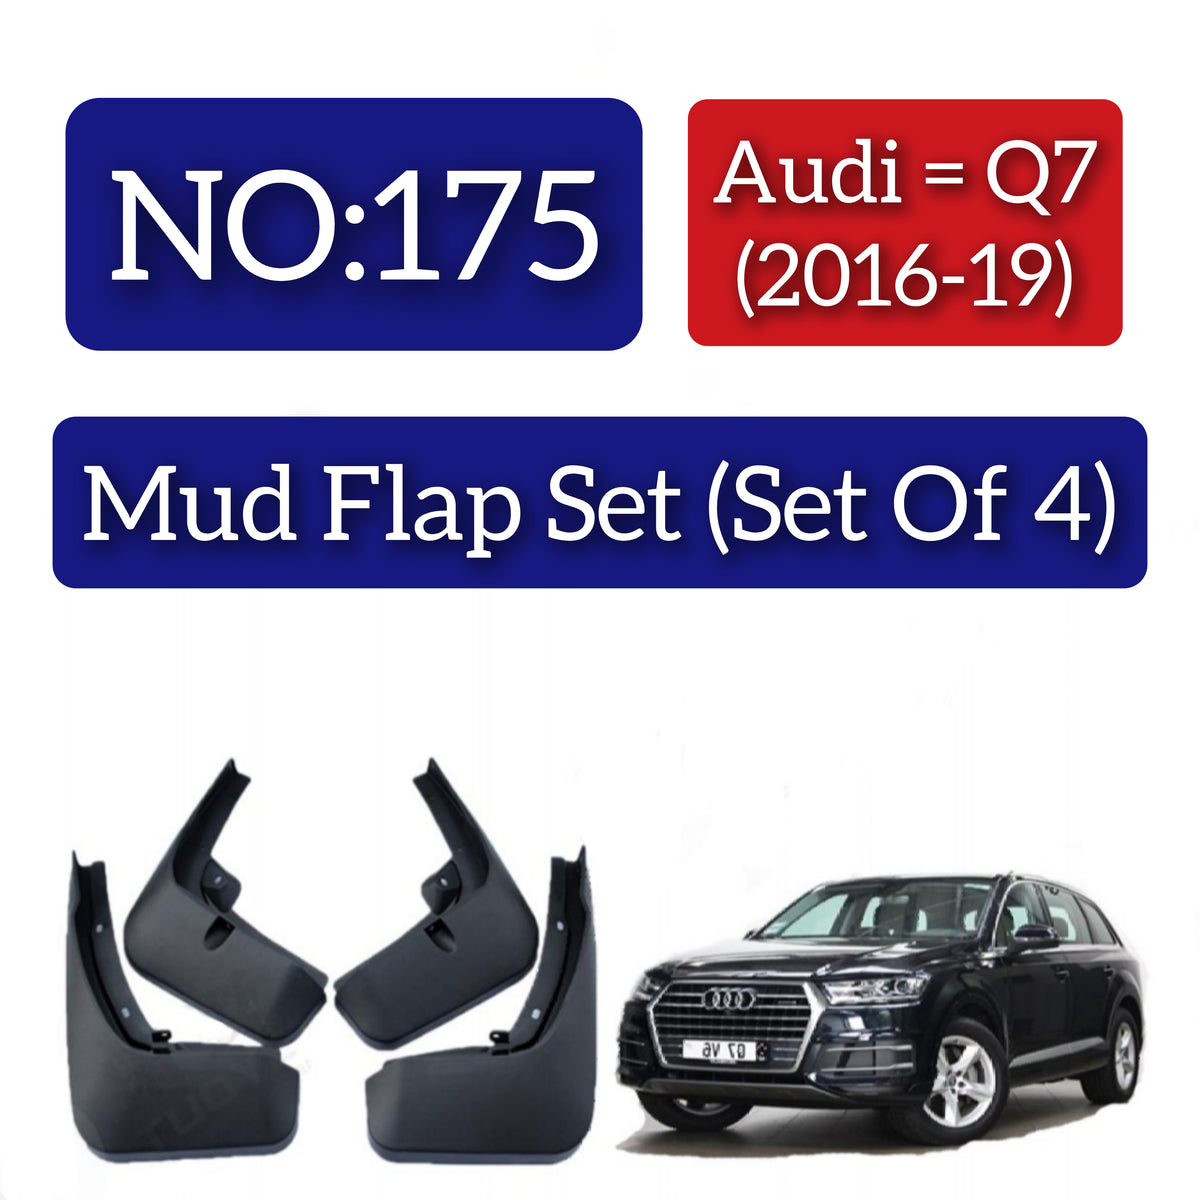 Audi Q7 (2016-19) Mud Flap Set (Set of 4) Tag 175